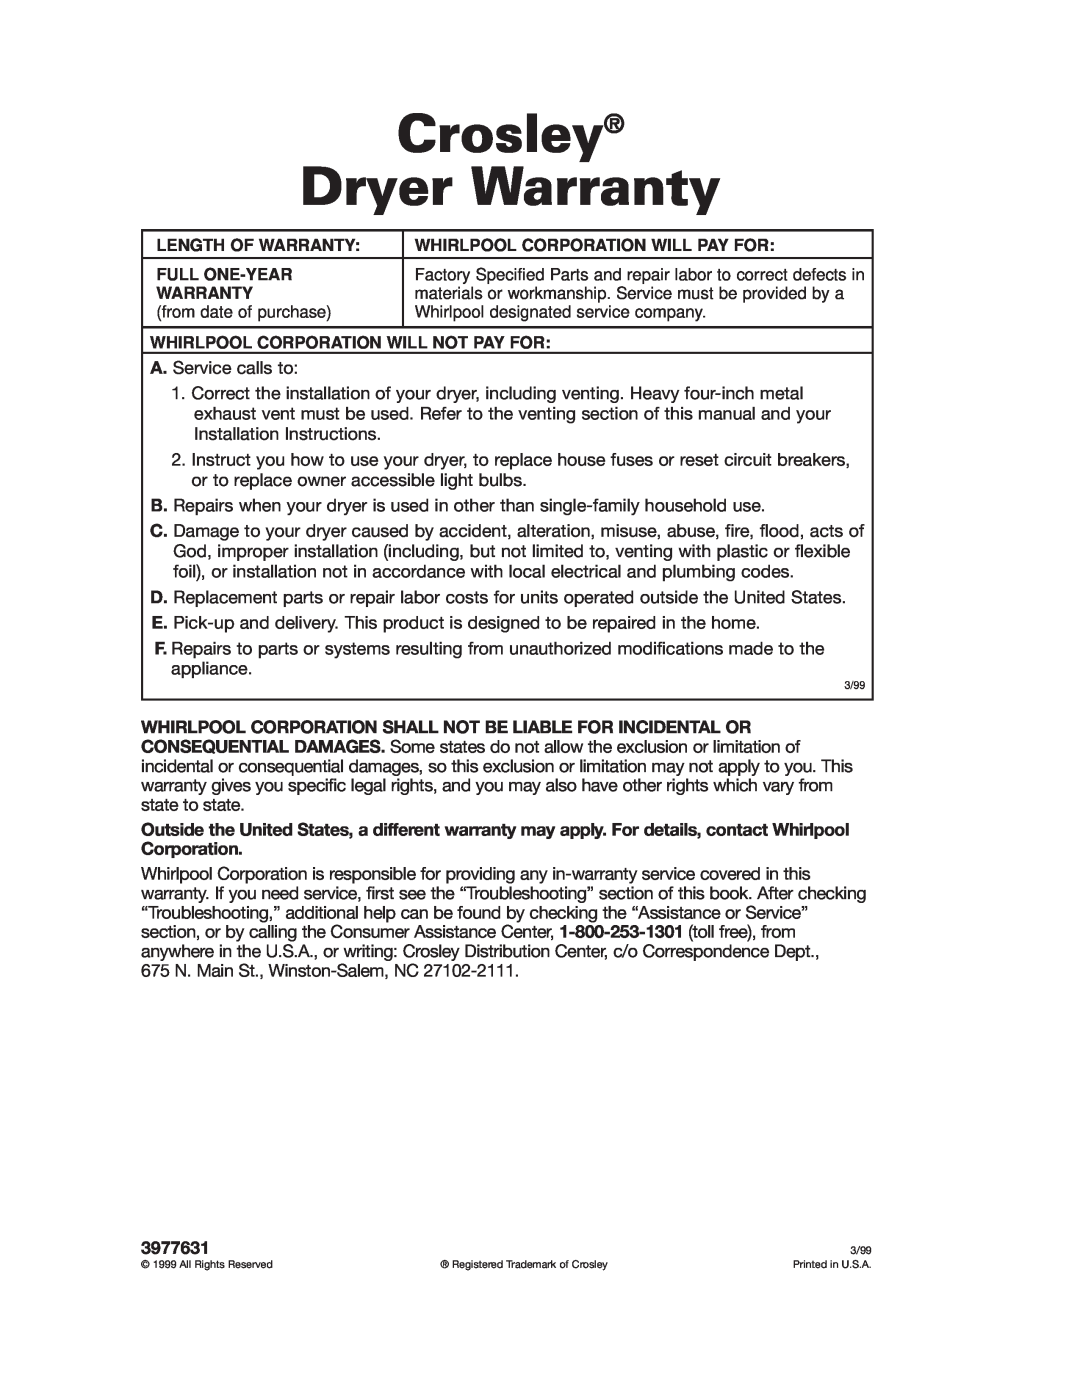 Whirlpool 3977631 Crosley Dryer Warranty, Length Of Warranty, Whirlpool Corporation Will Pay For, Full One-Year 